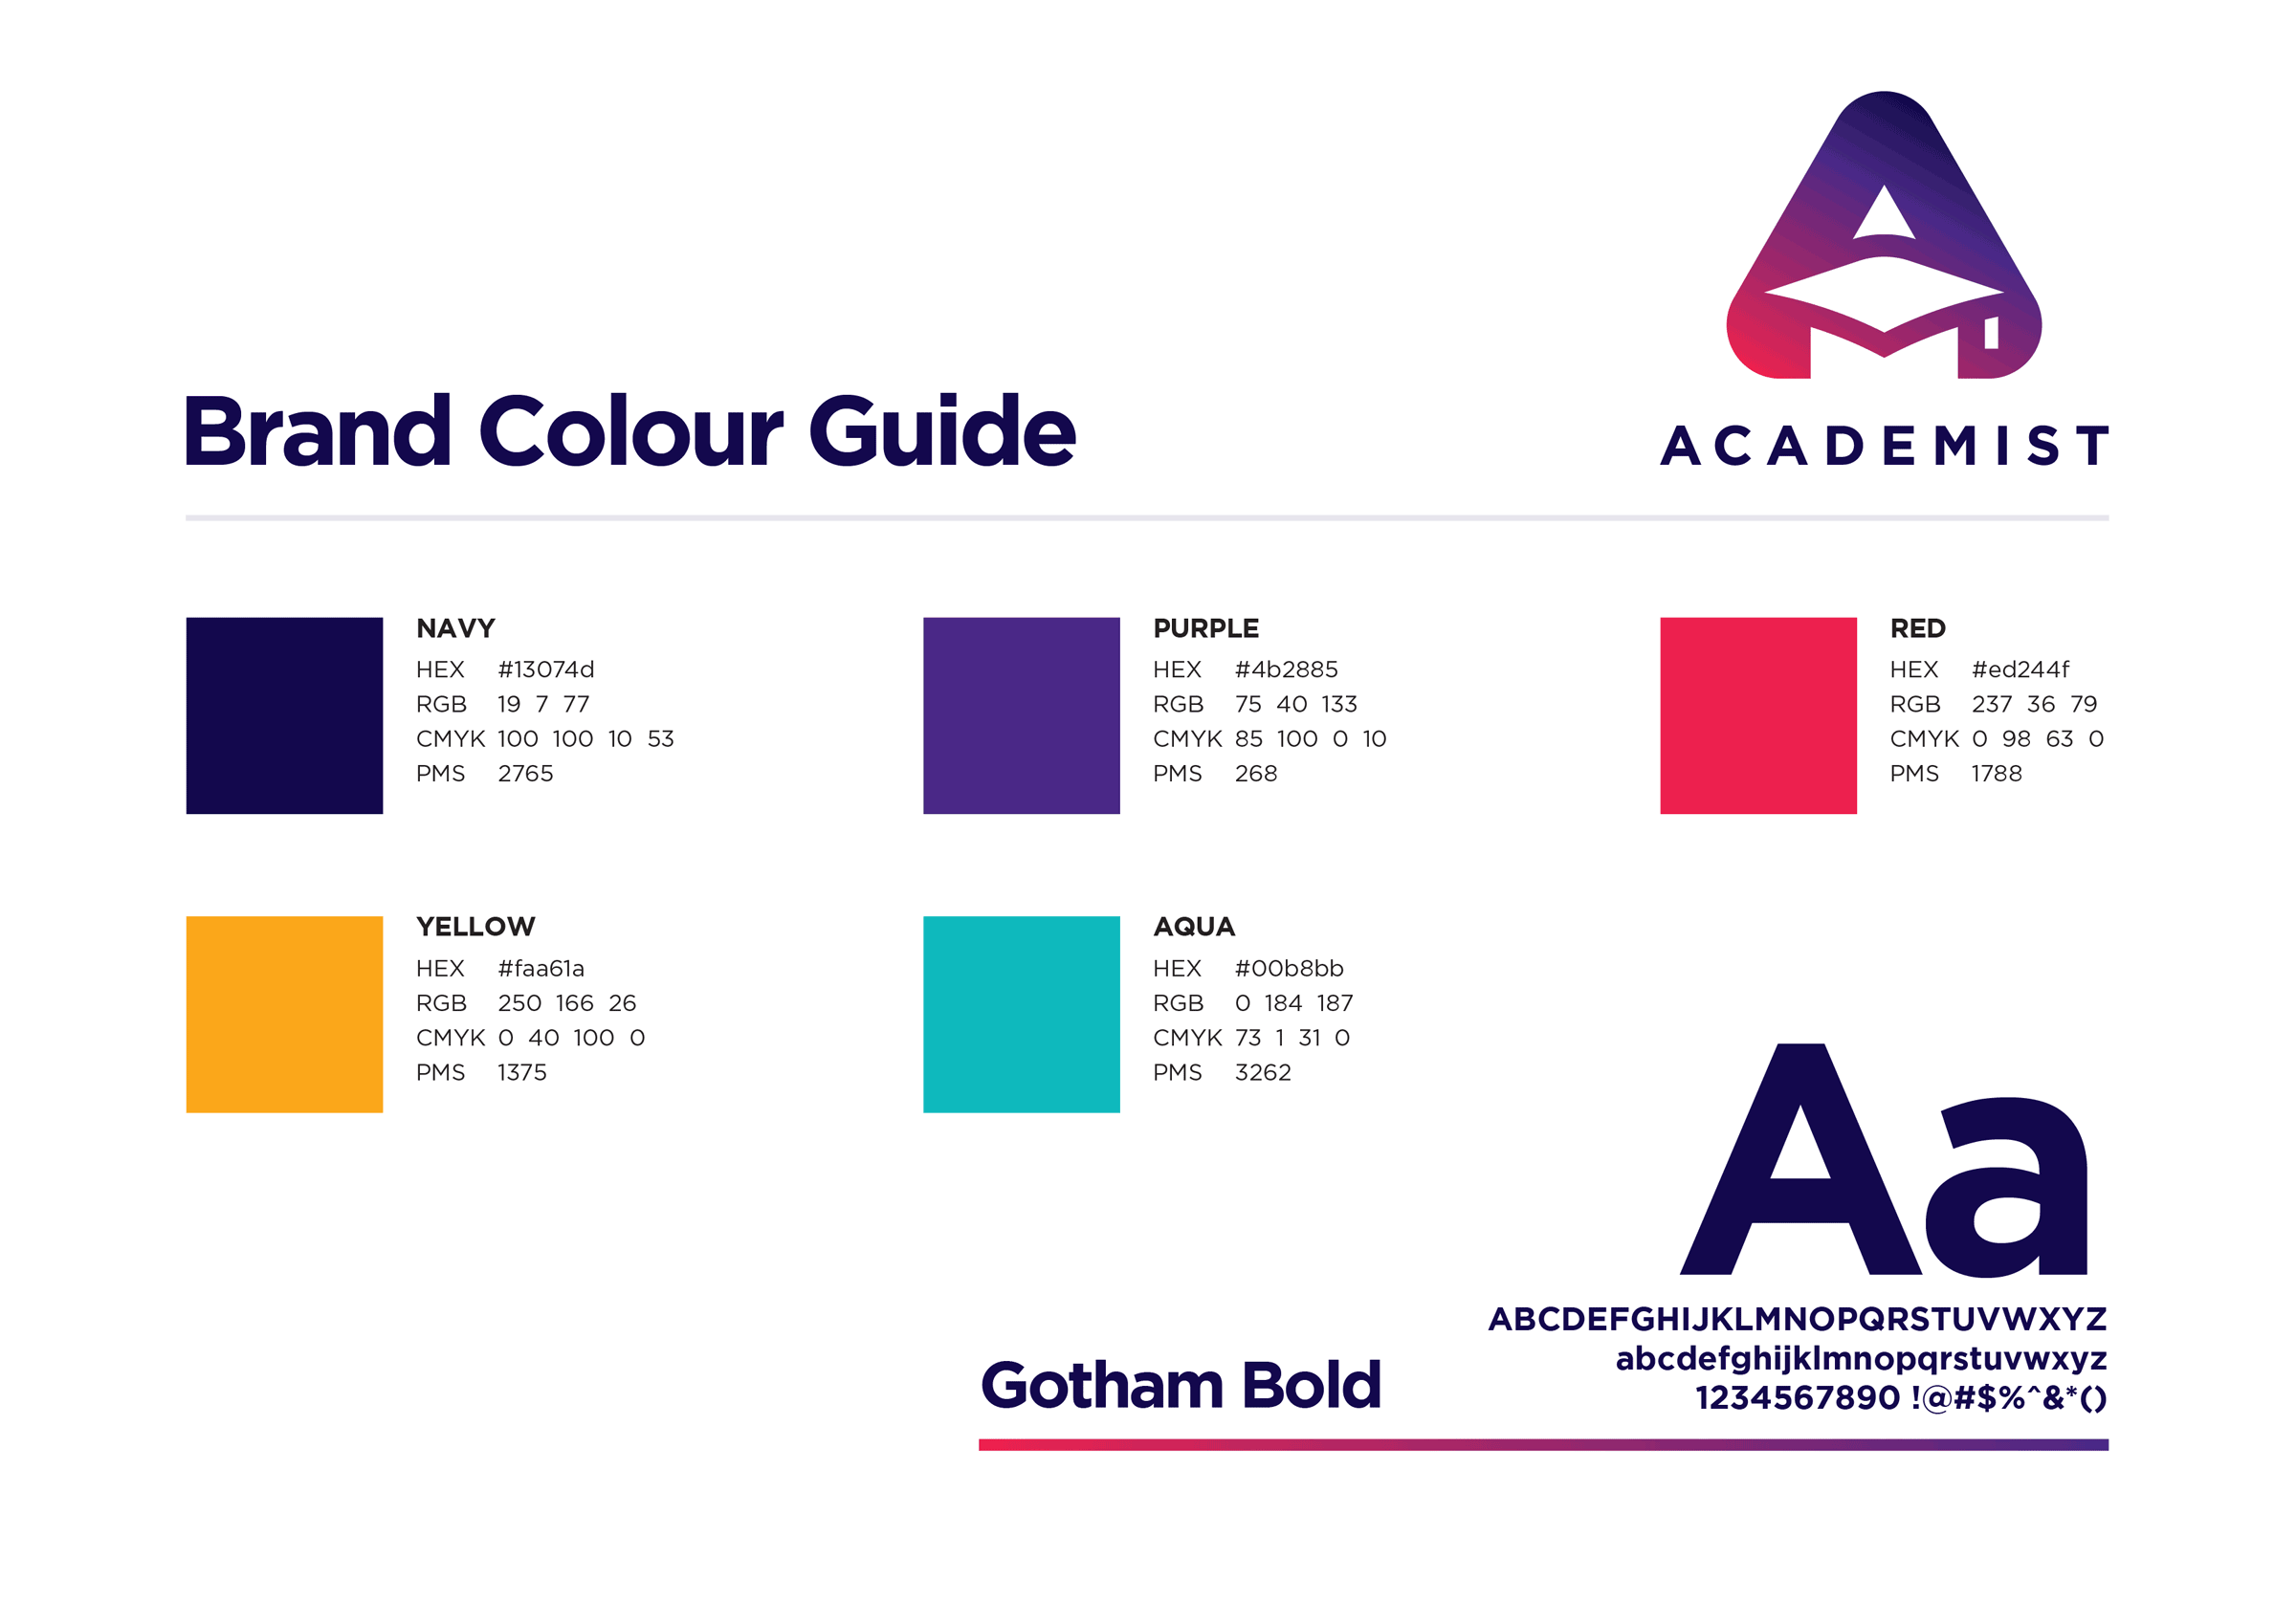 Academist Brand Colour Guide